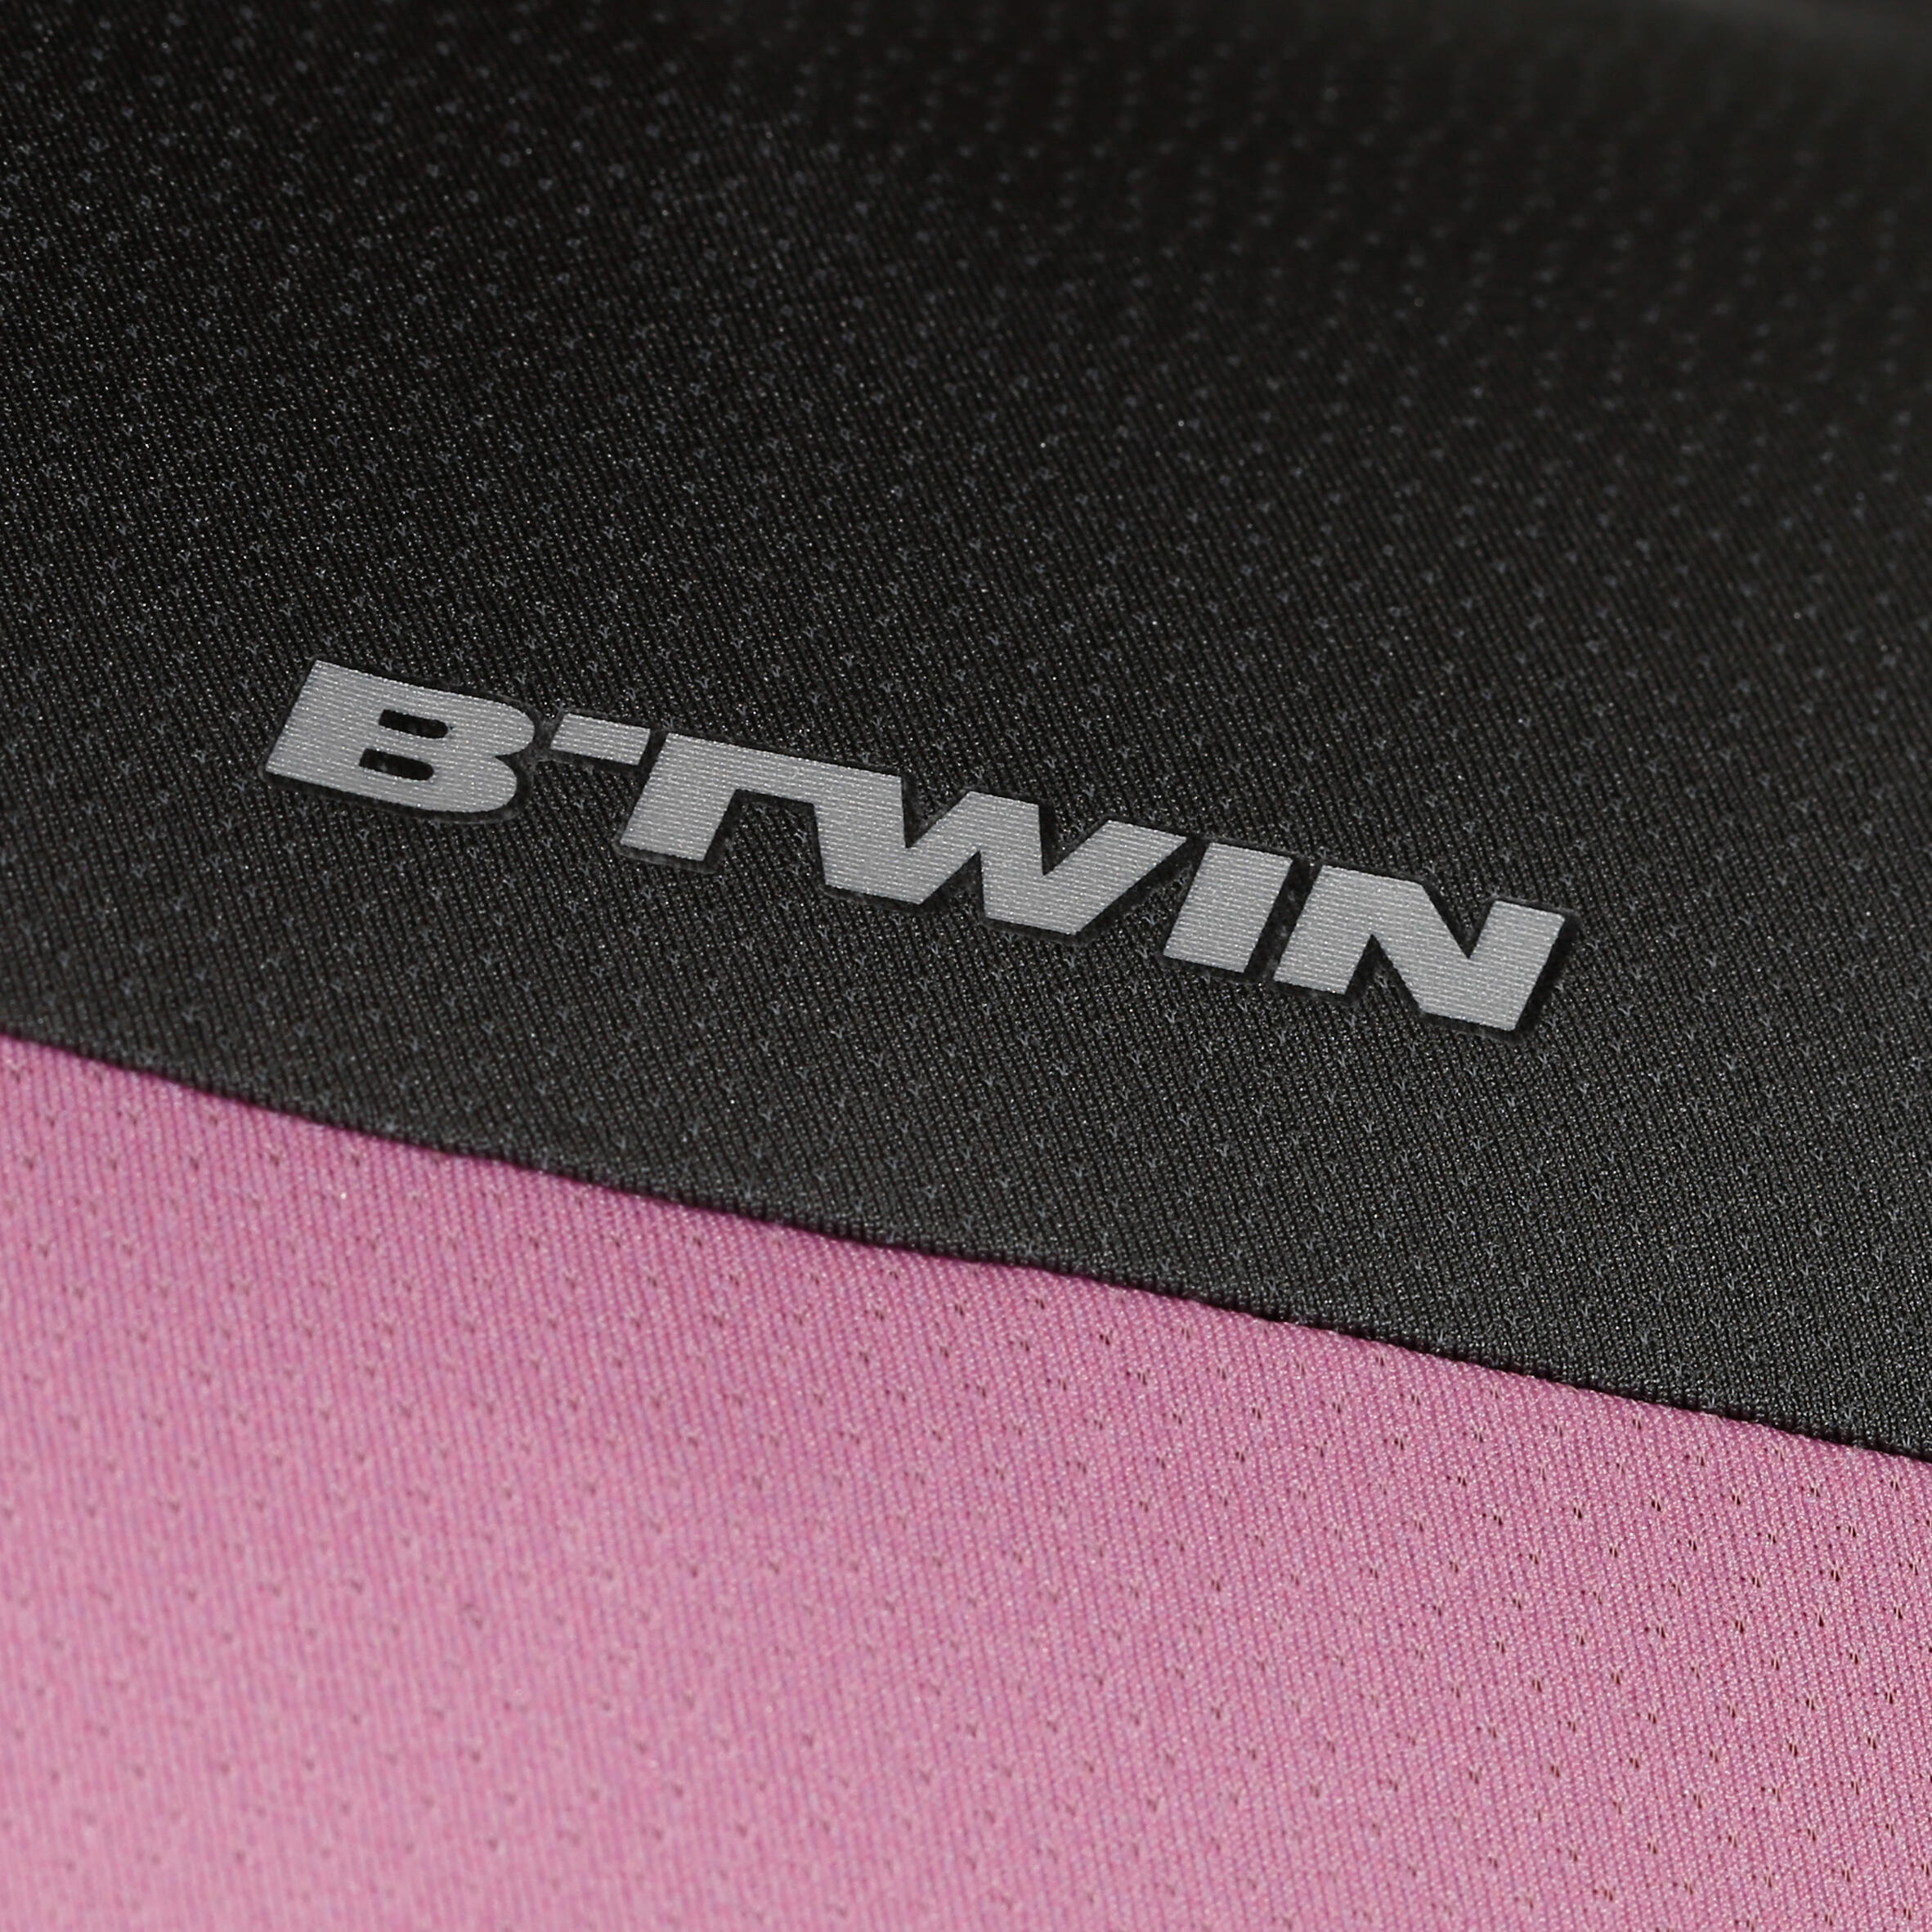 500 Women's Short Sleeve Cycling Jersey - Pink/Grey 8/8